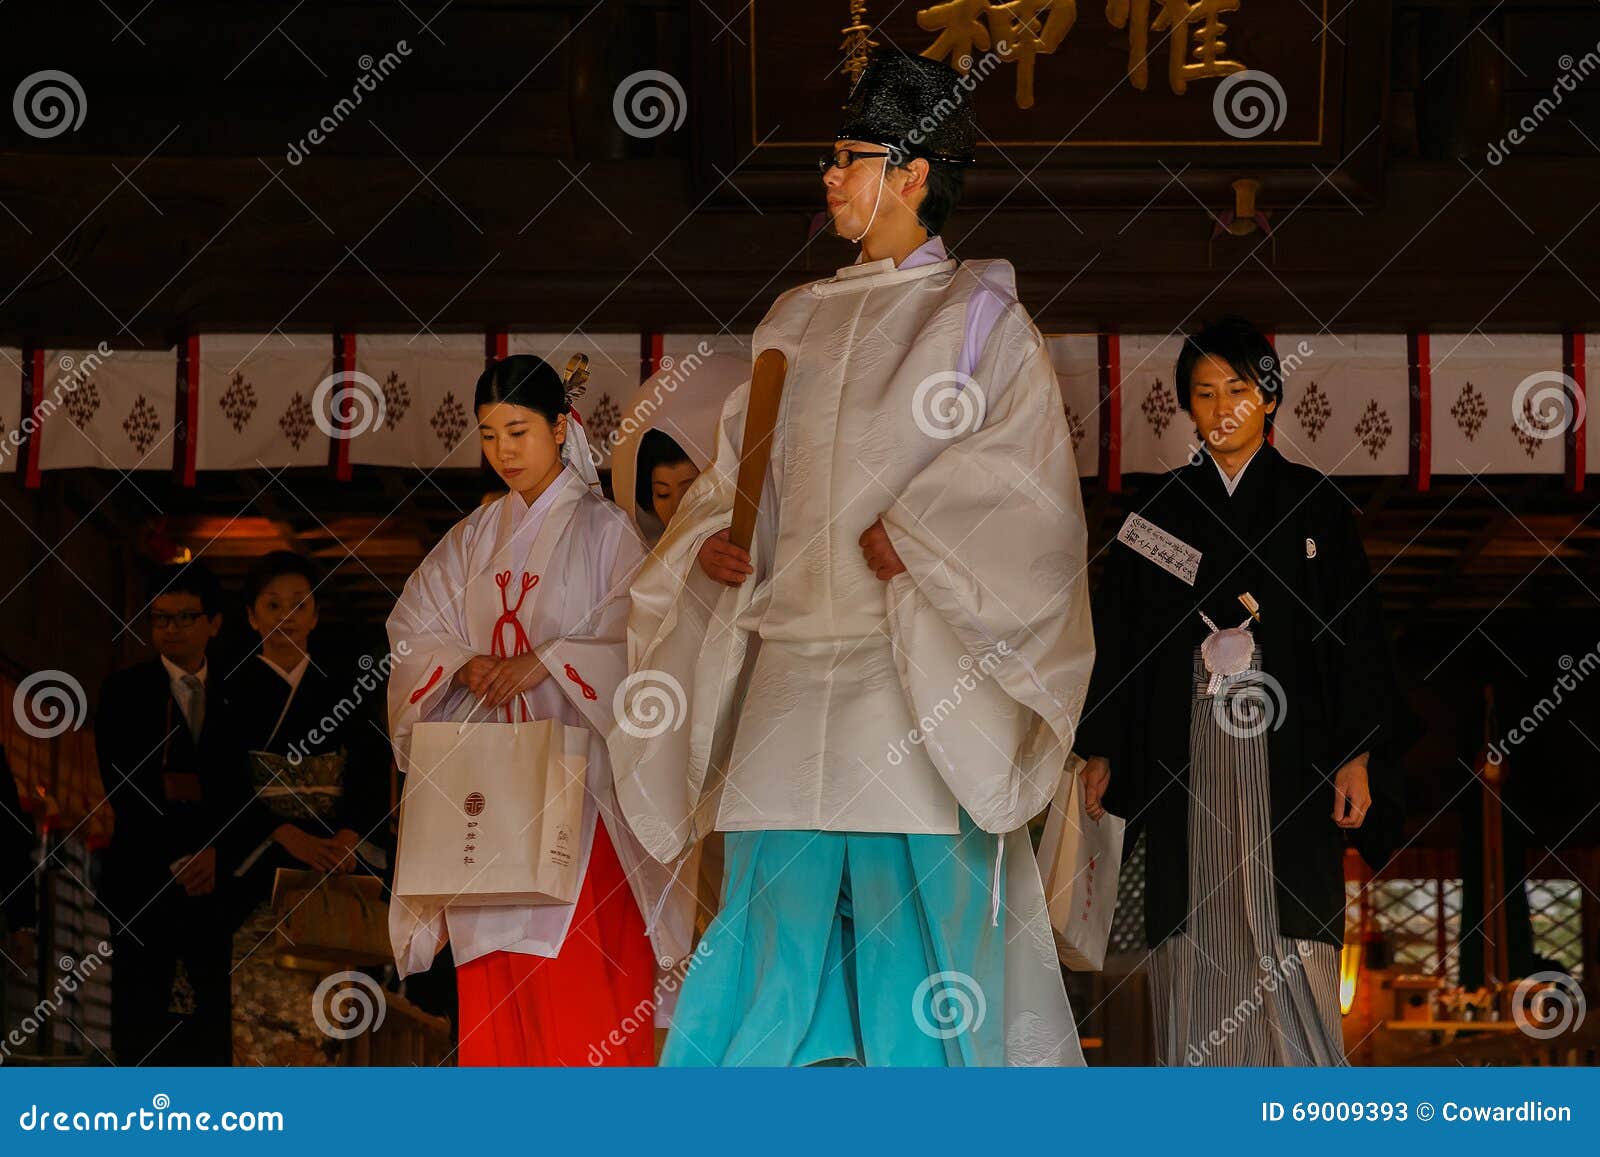 Japanese Traditional Wedding Ceremony Editorial Stock Photo - Image of